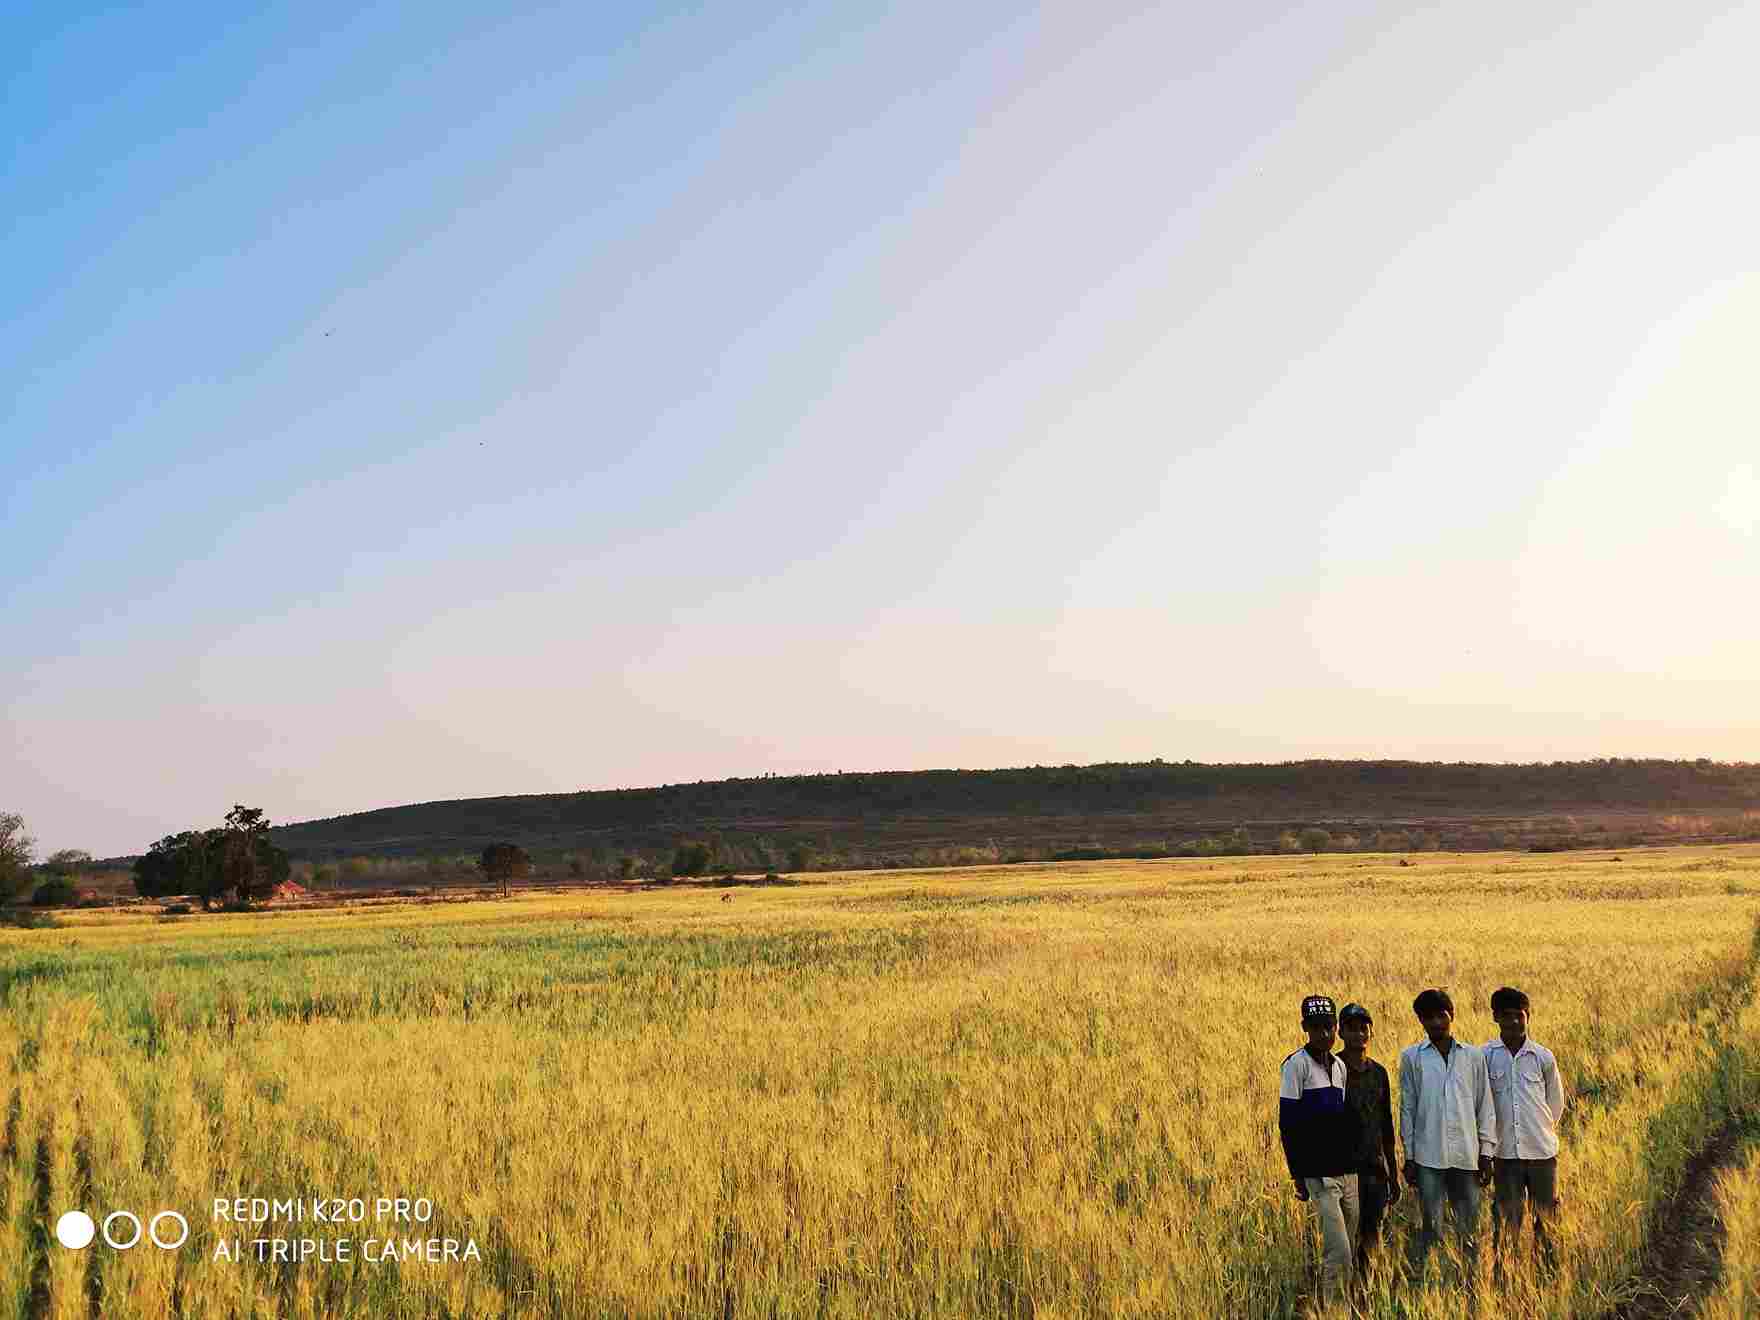 Wheat crop at the organic farm started by Sudhanshu Sharma and Susmita Roy